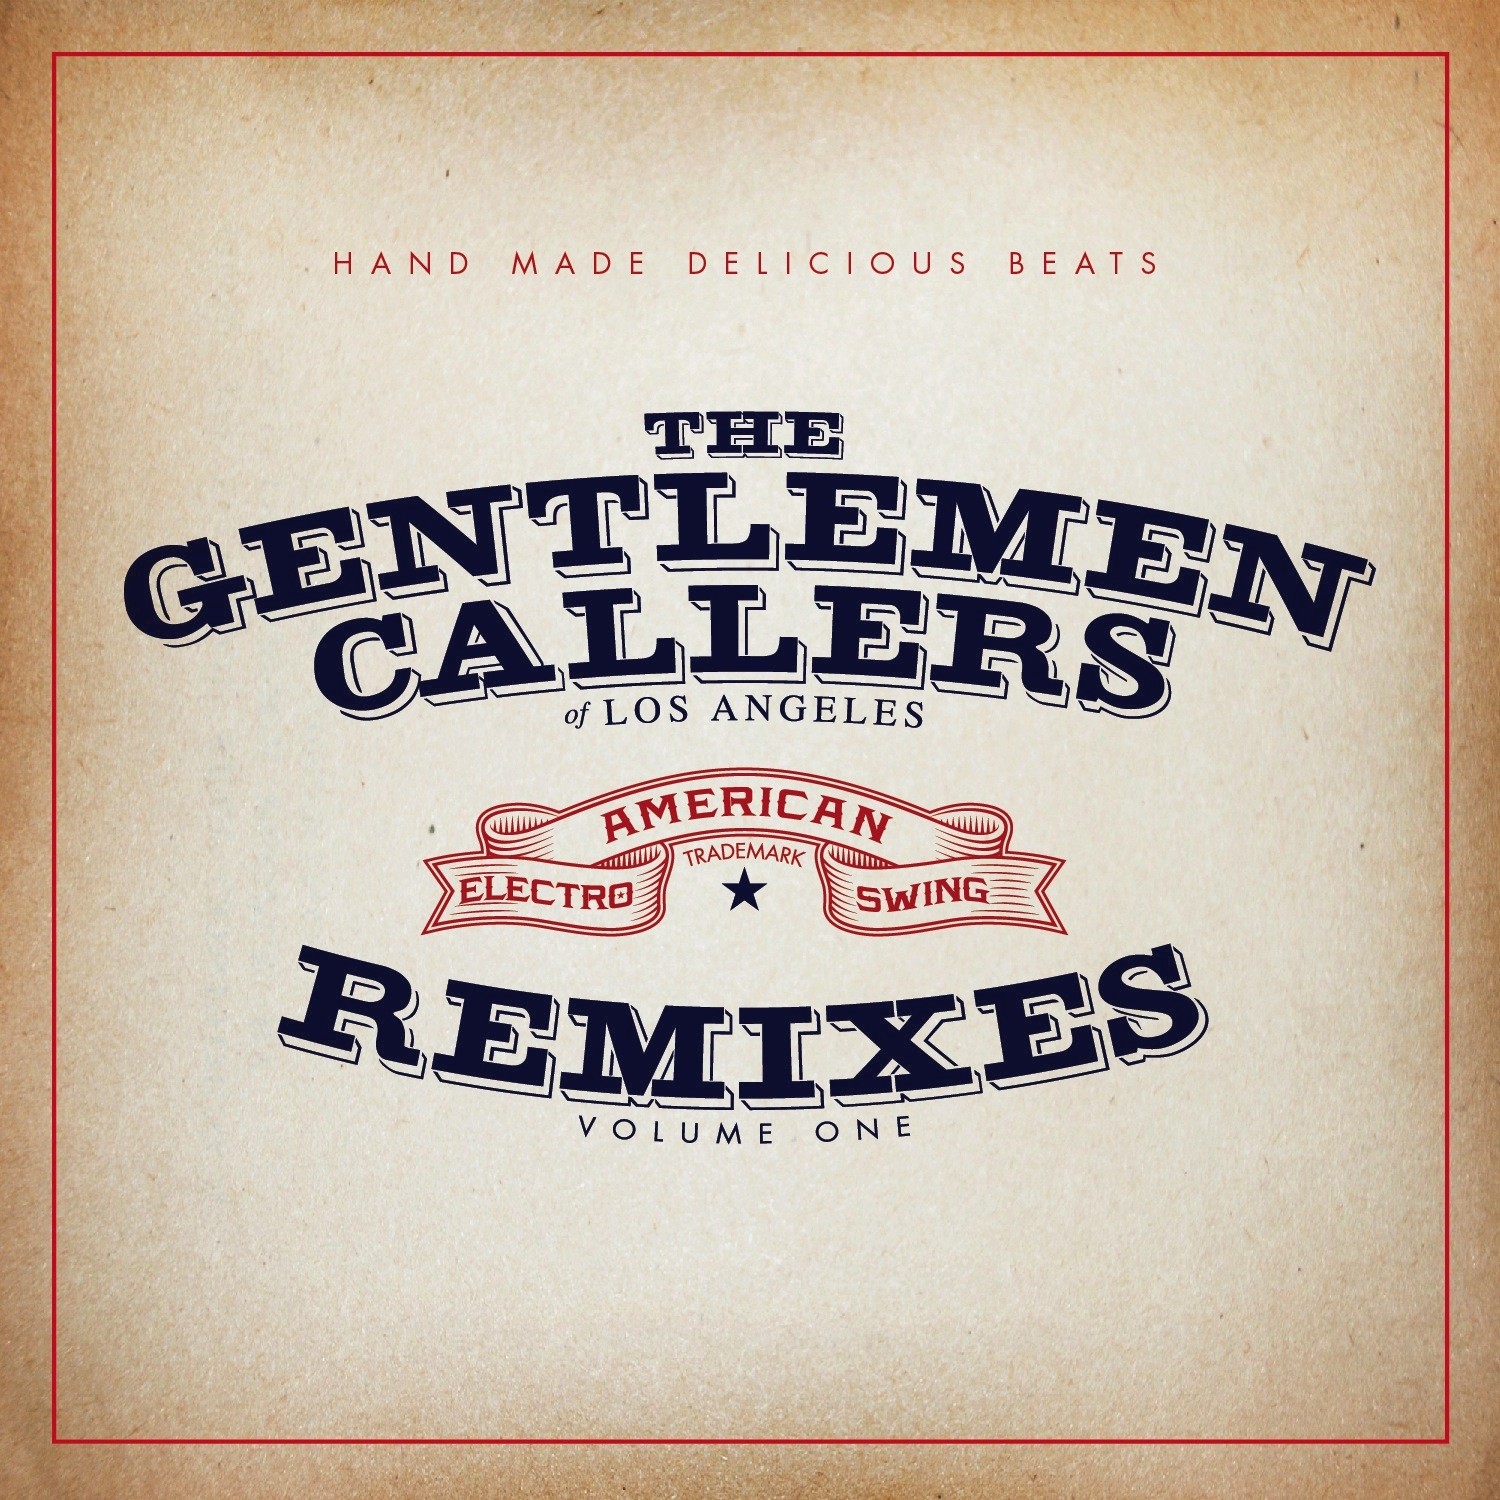 Non Saro Mai Doris Day (The Gentlemen Callers of Los Angeles Remix)